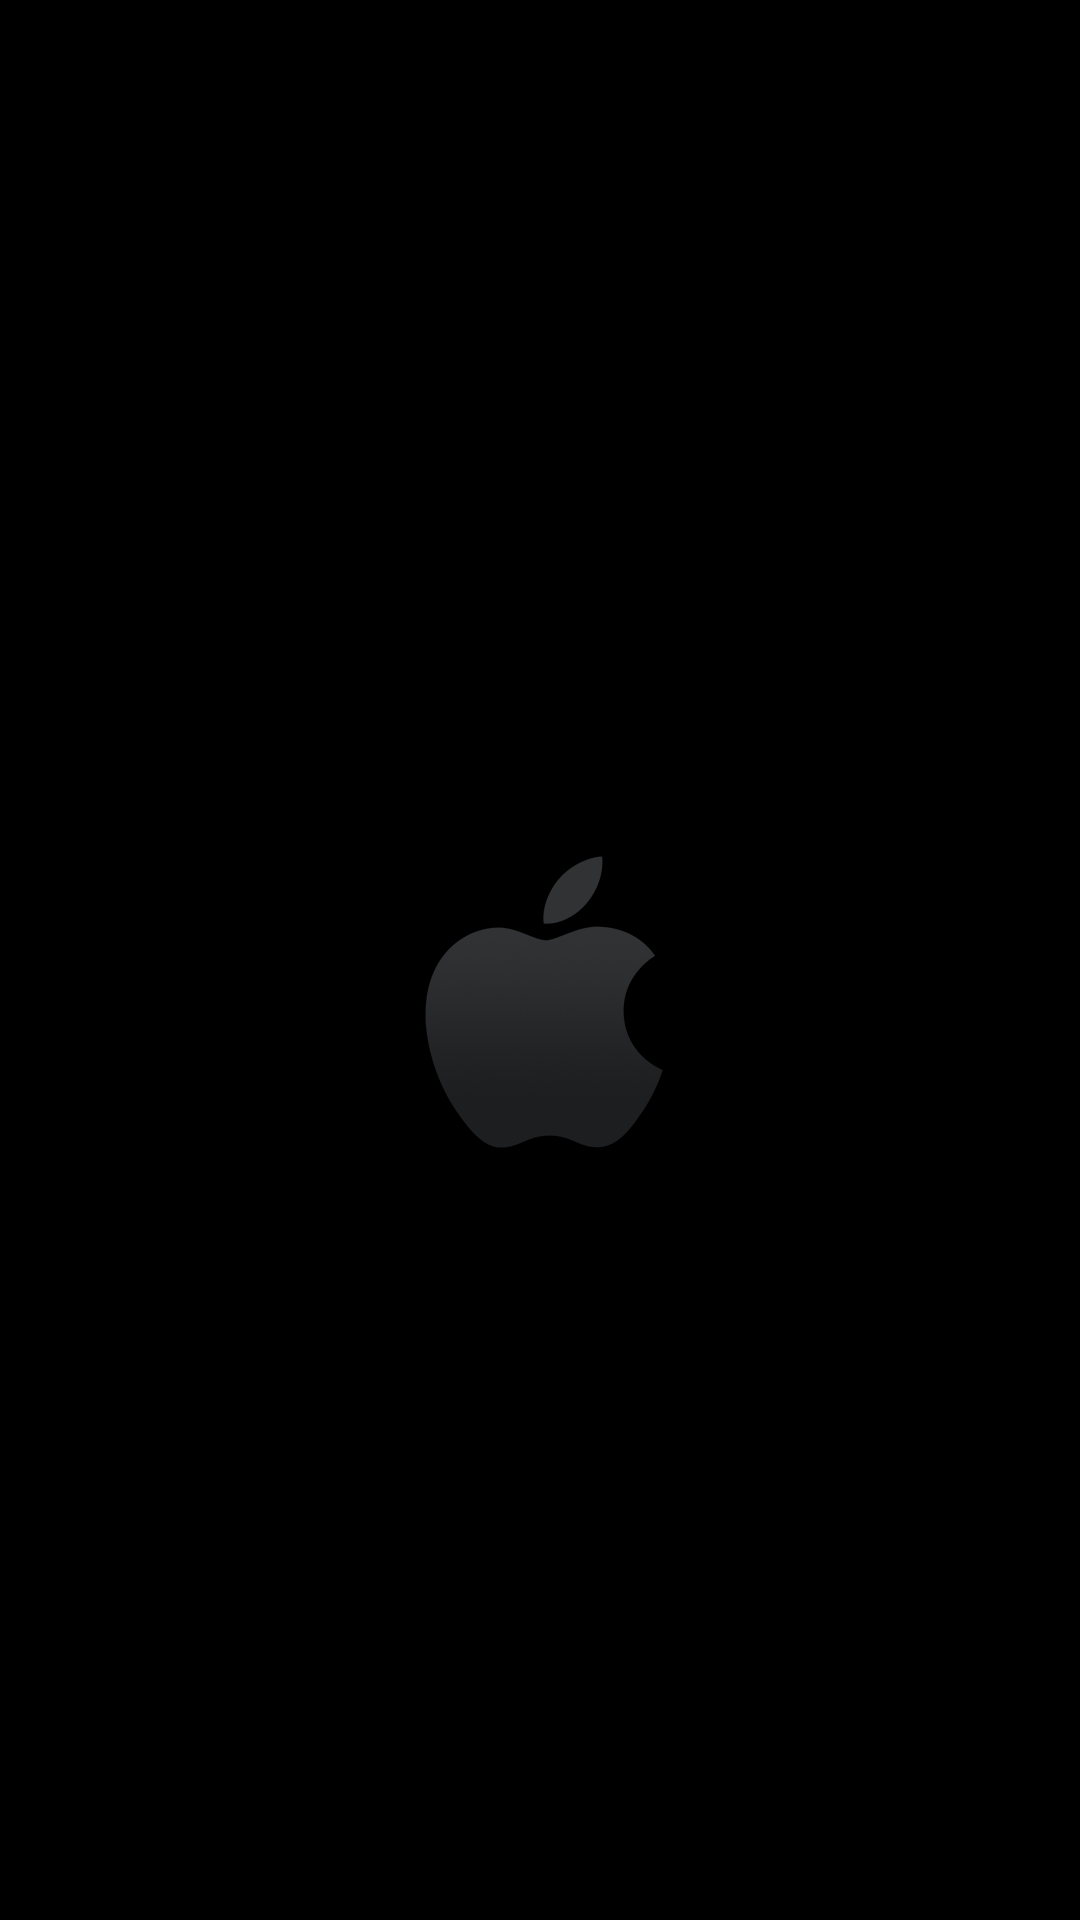 Black Apple. Apple logo wallpaper iphone, Apple wallpaper, Apple wallpaper iphone